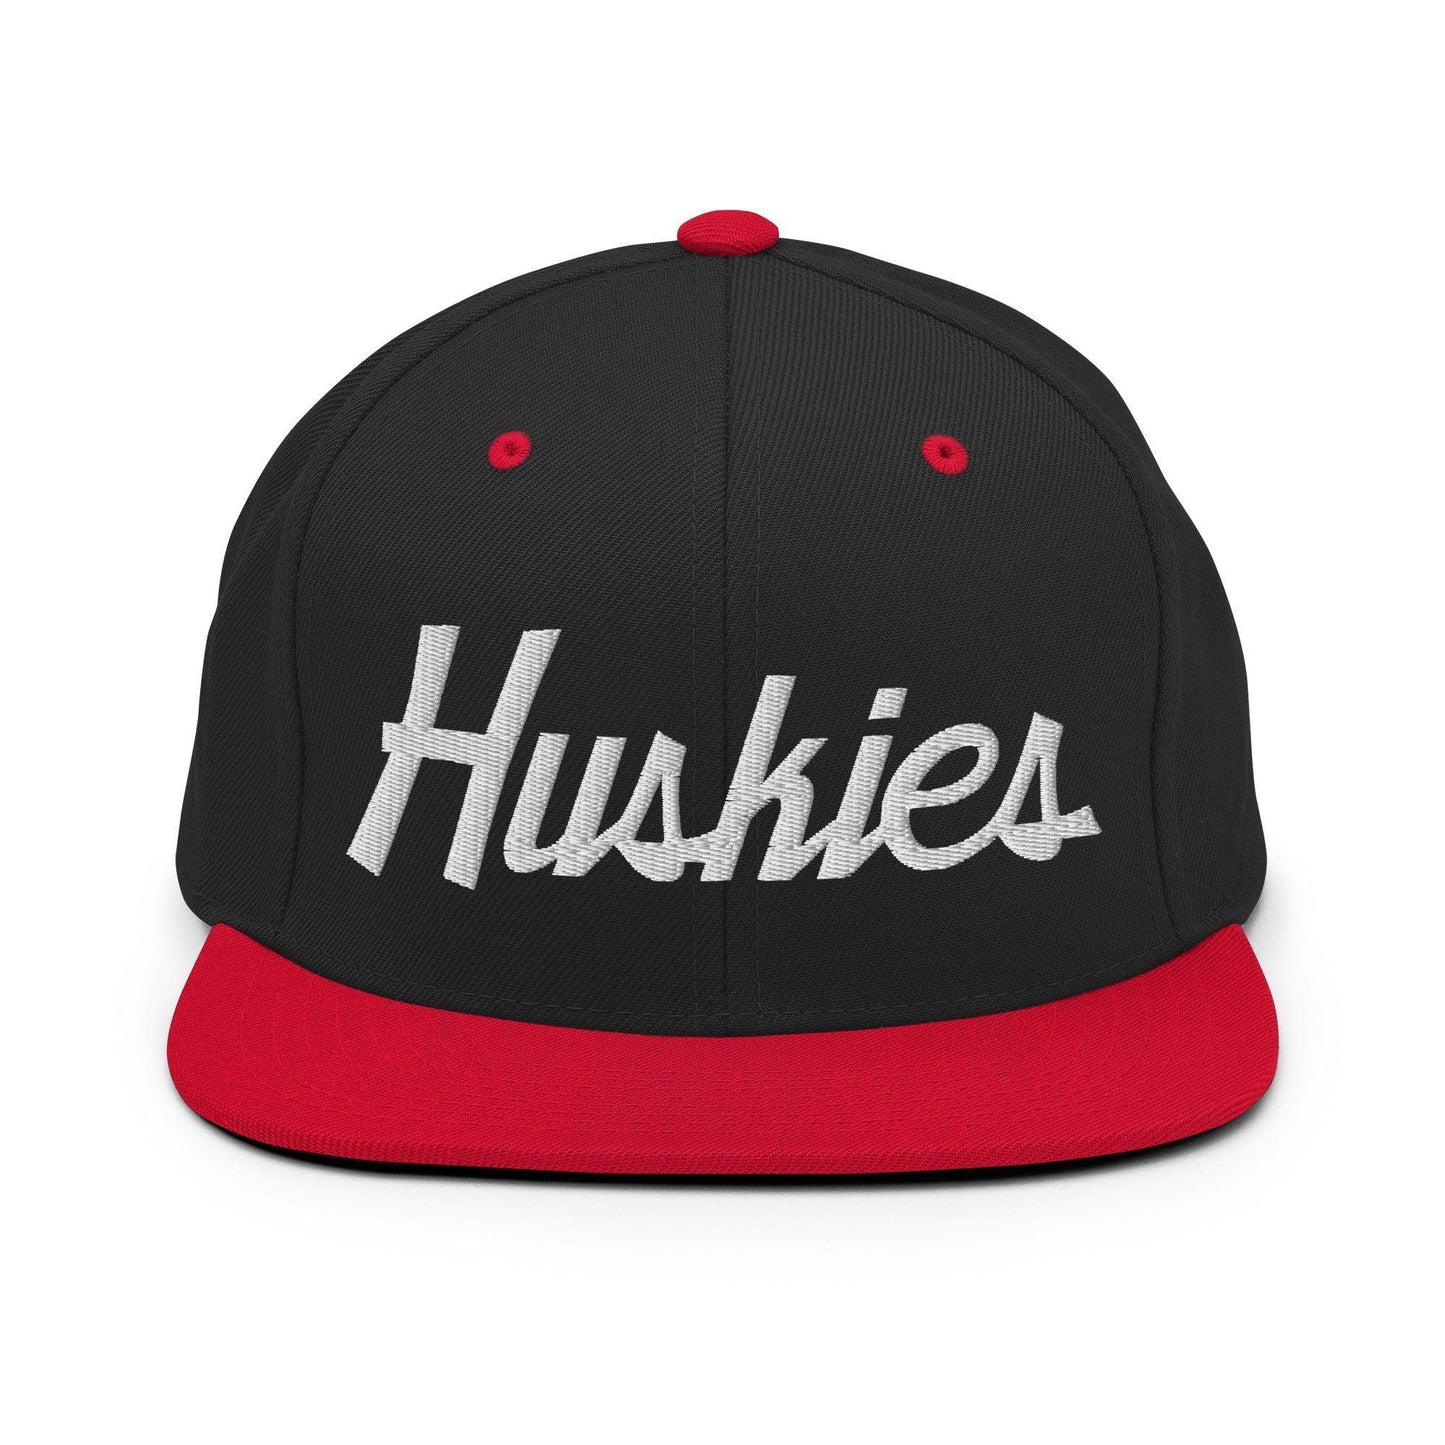 Huskies School Mascot Script Snapback Hat Black/ Red